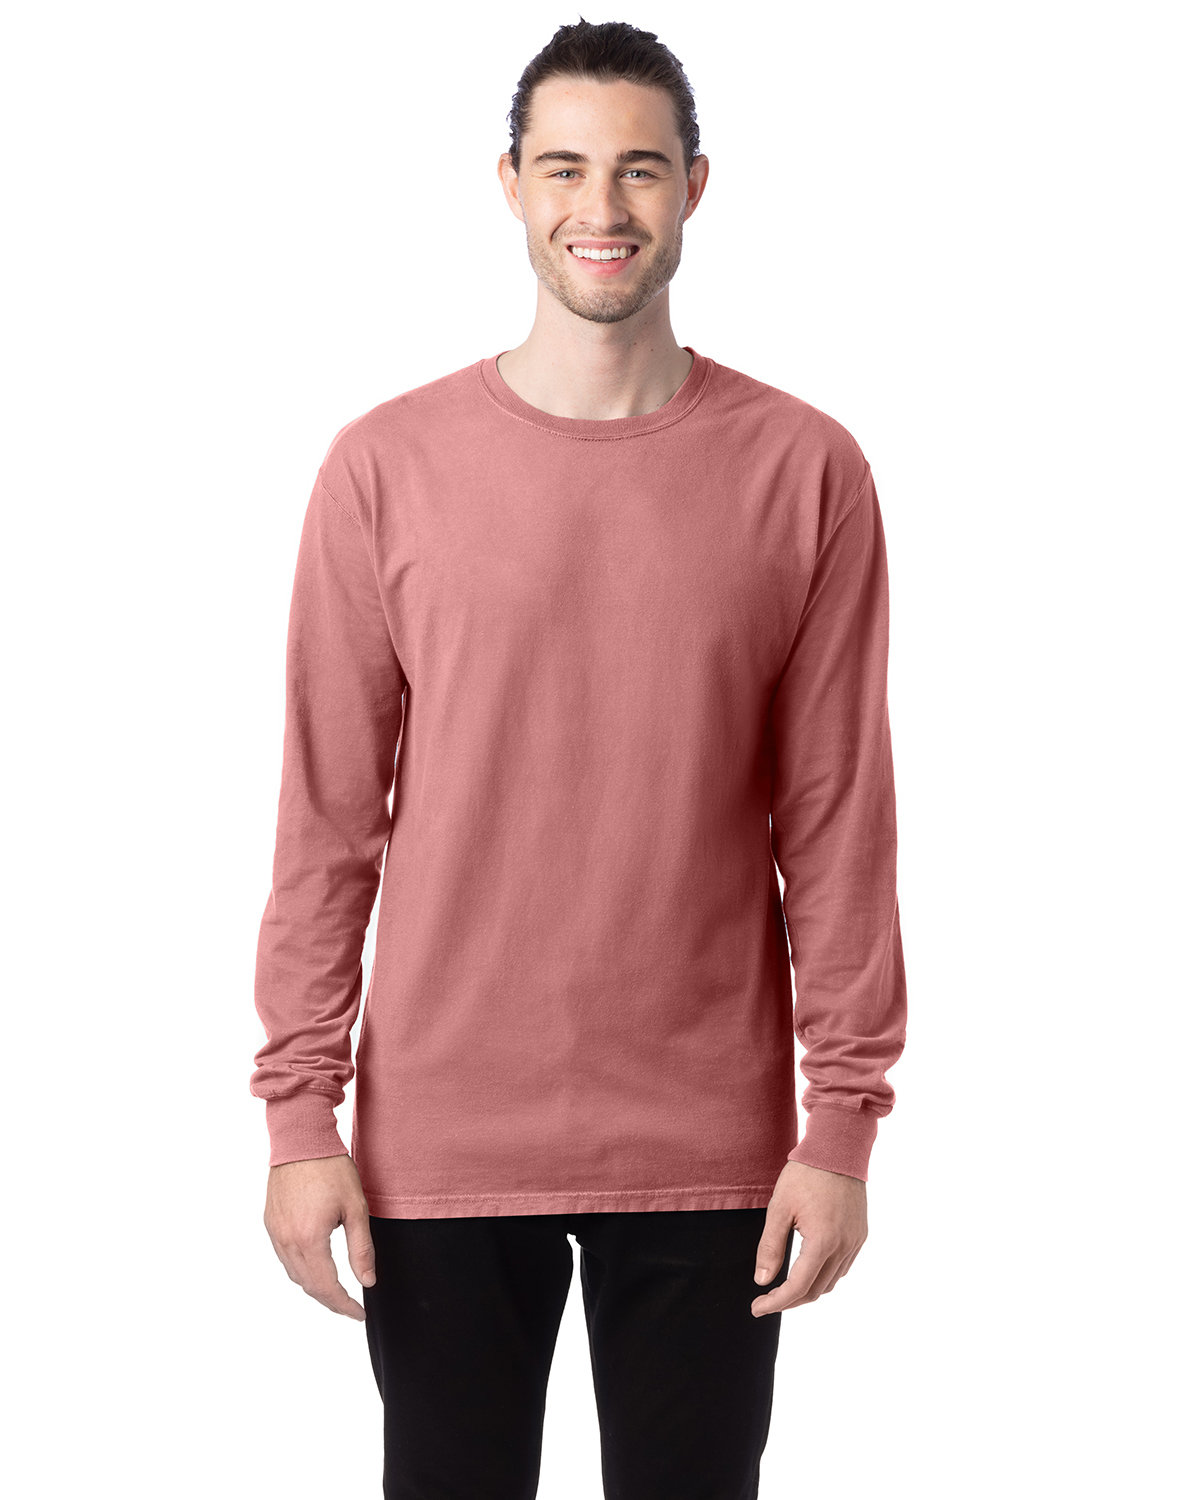 ComfortWash by Hanes Unisex Garment-Dyed Long-Sleeve T-Shirt MAUVE 